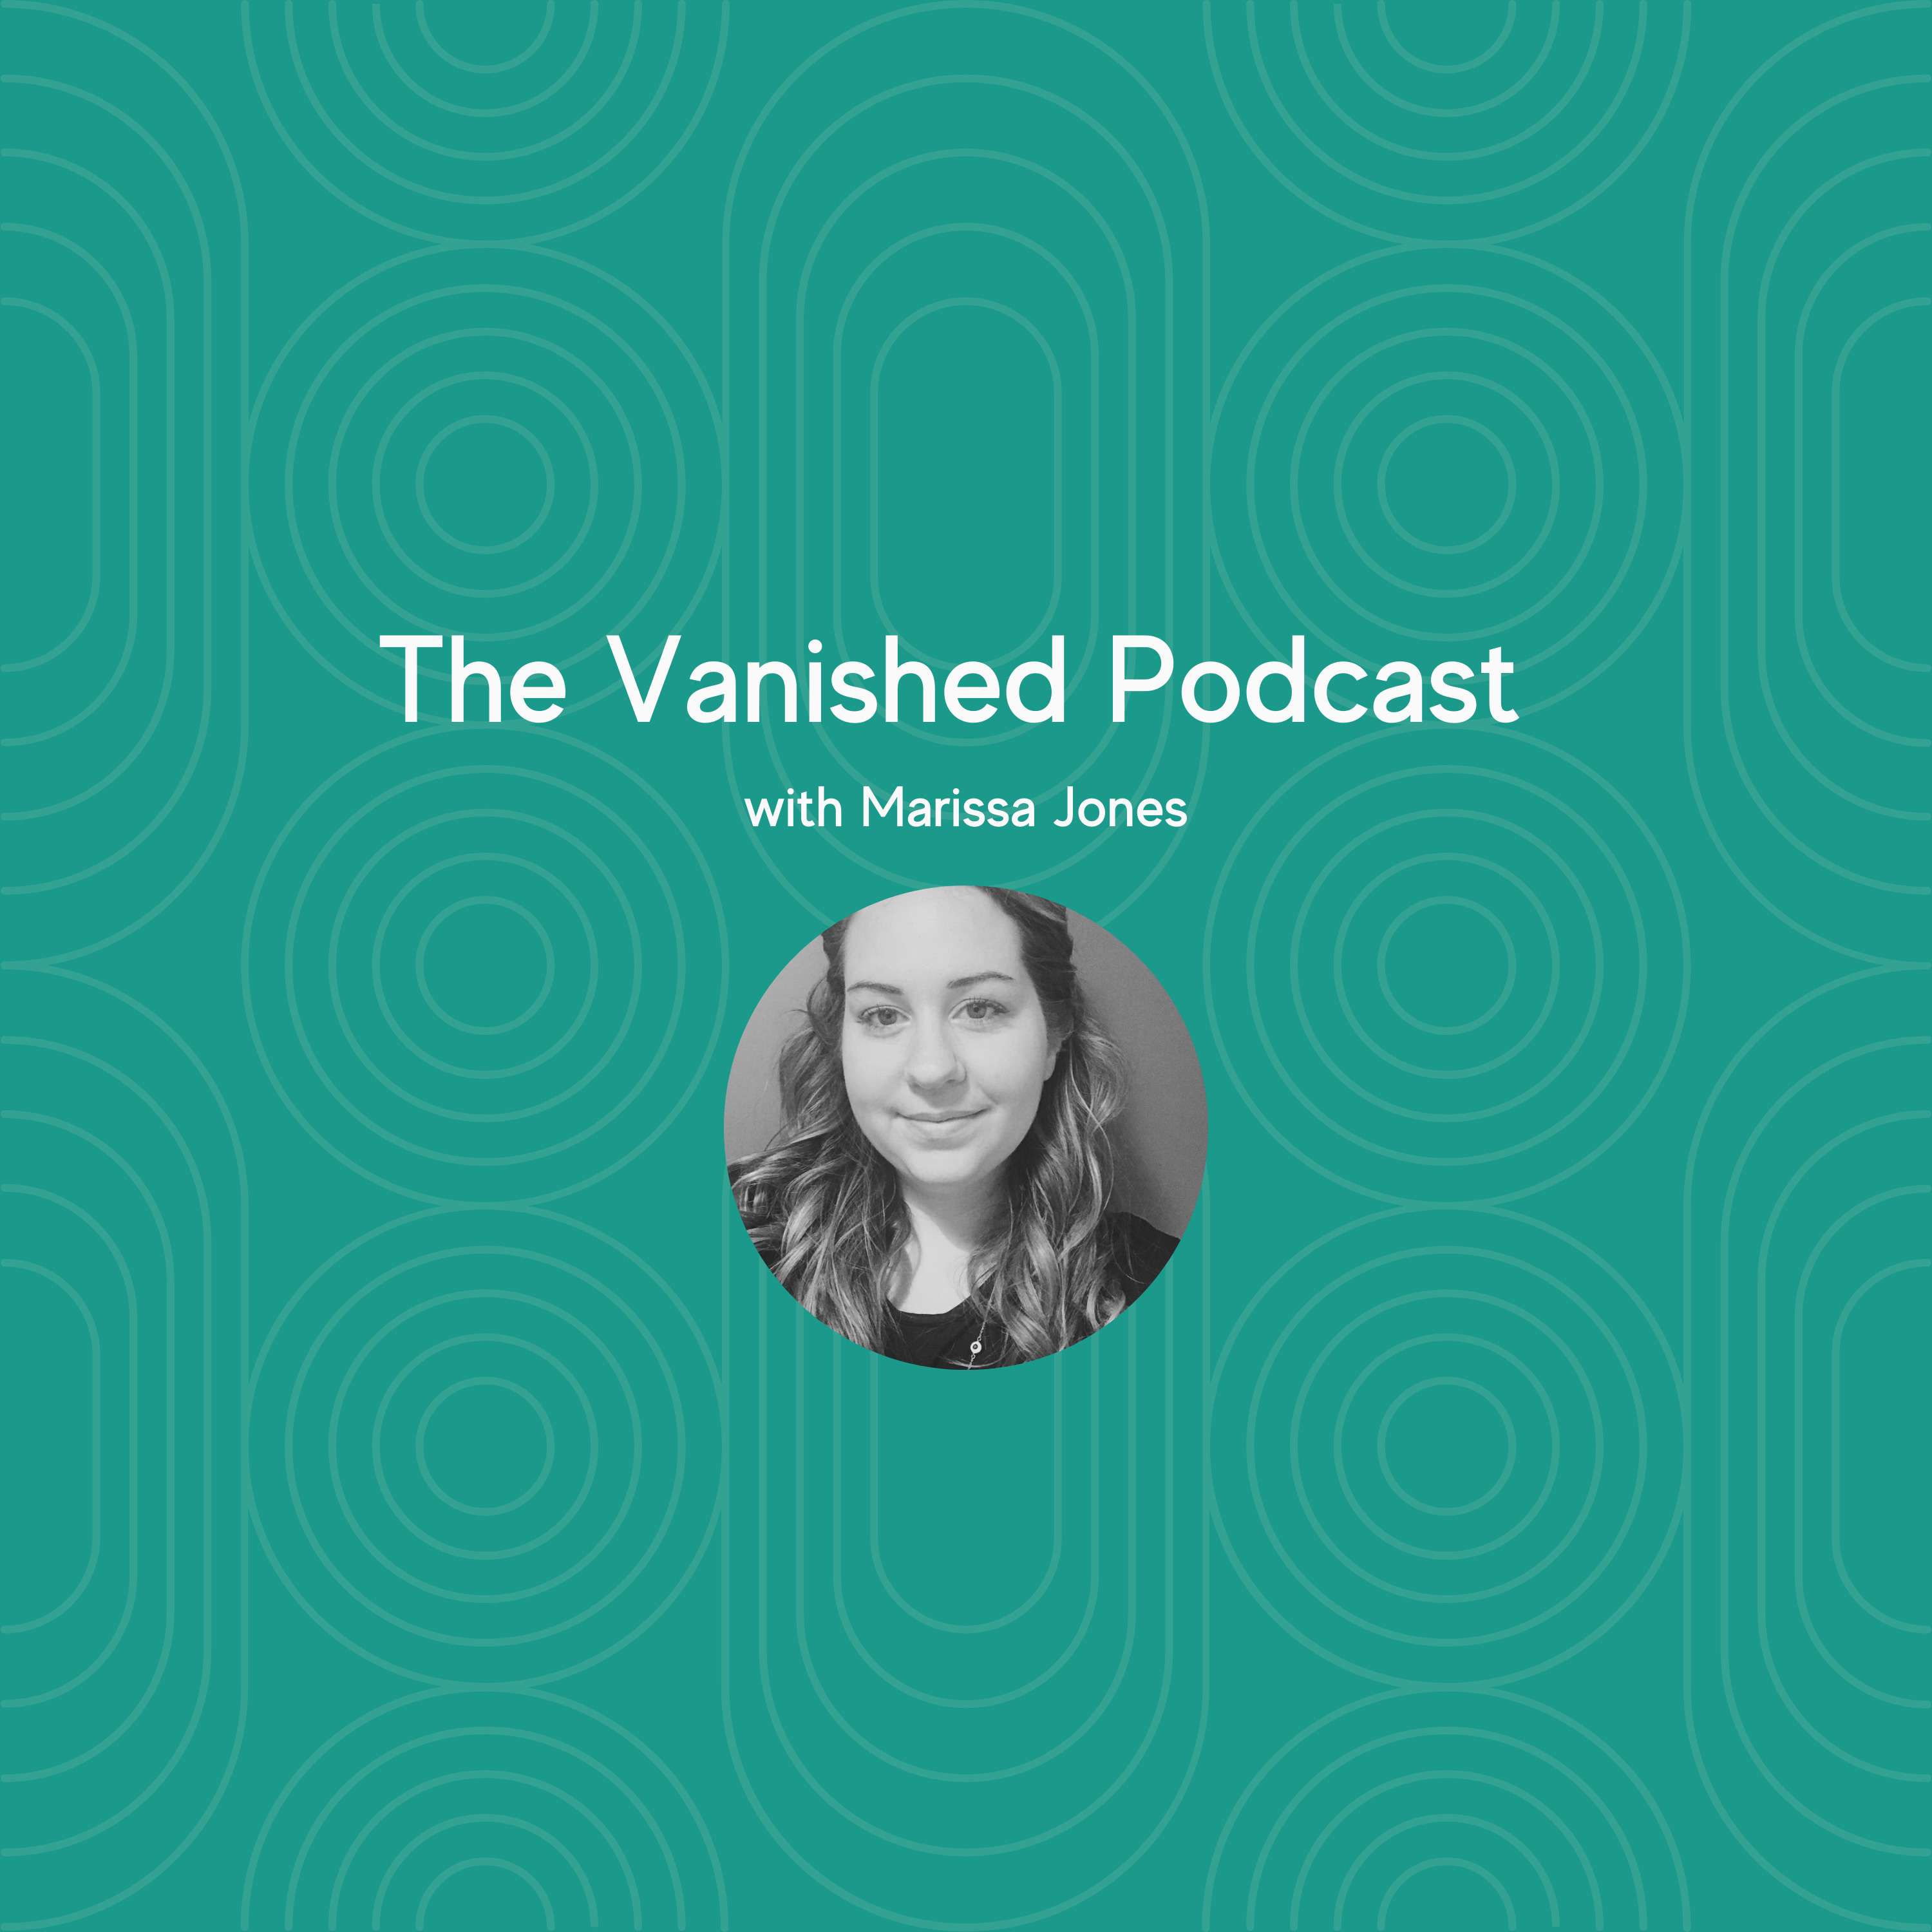 The Vanished Podcast with Marissa Jones